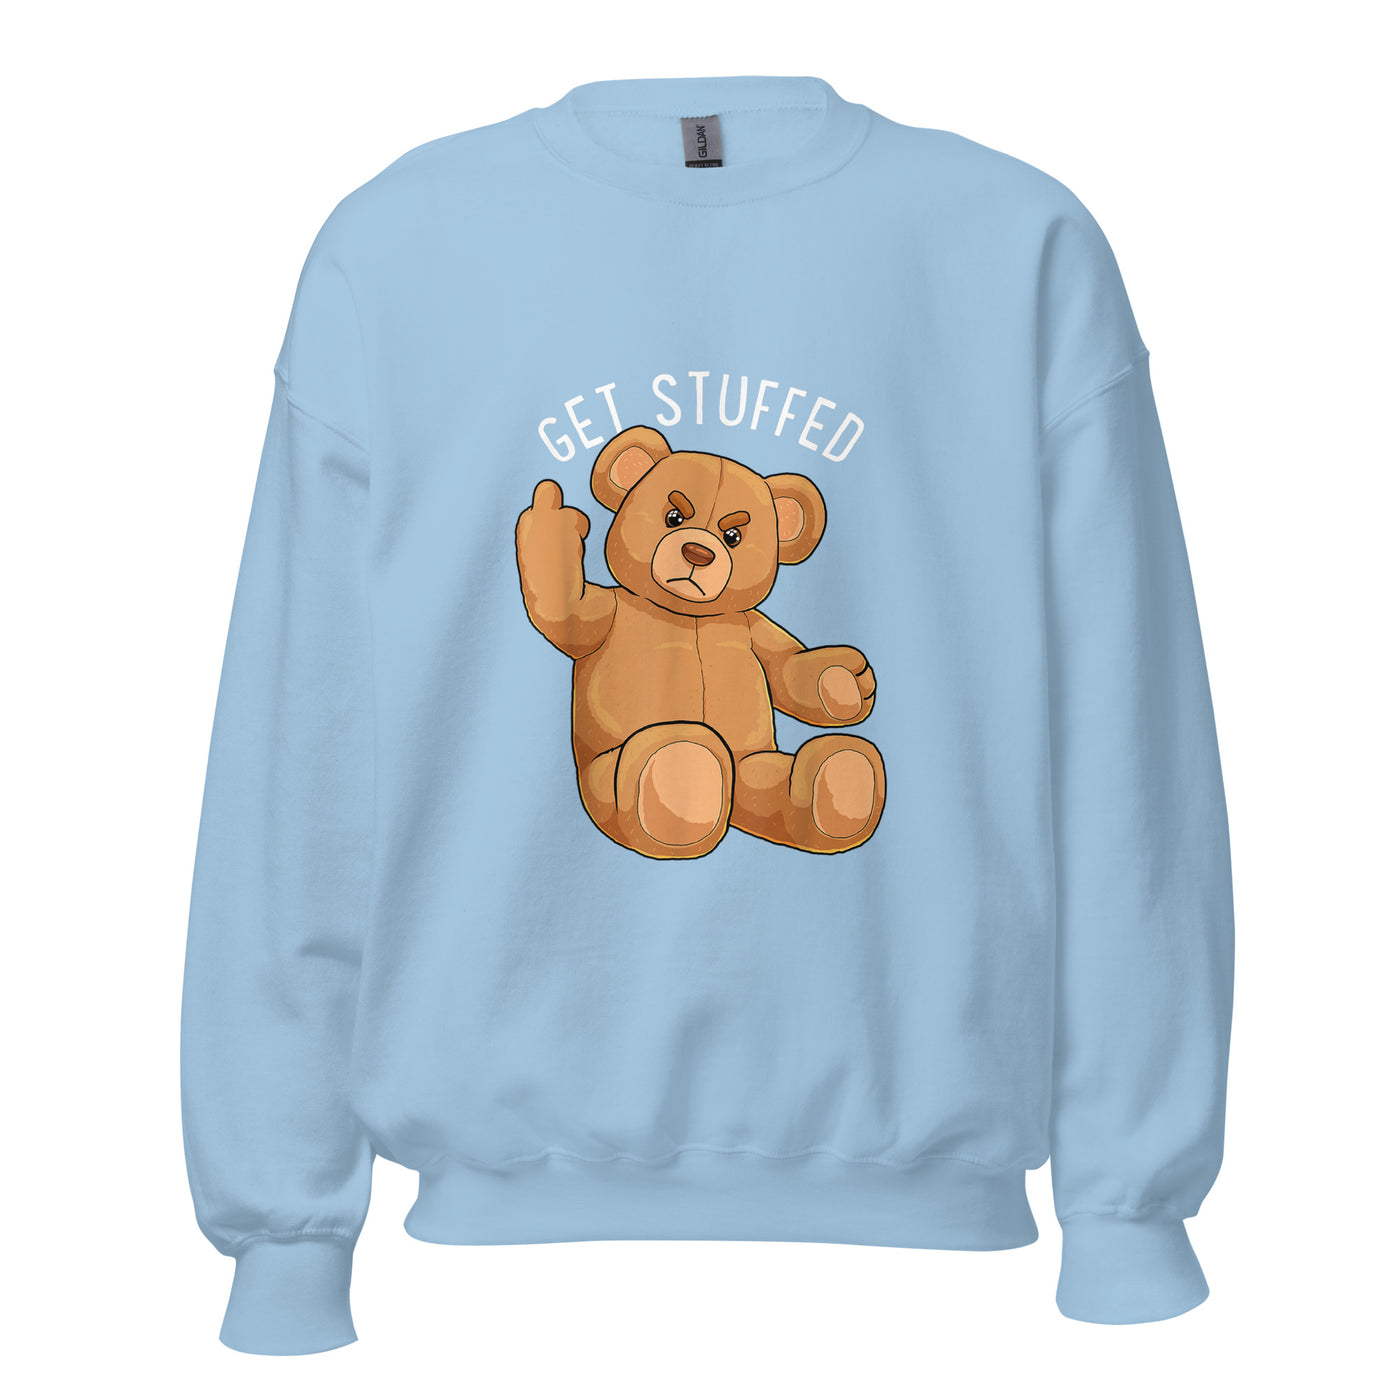 GUT STUFFED TEDDY BEAR Unisex Sweatshirt